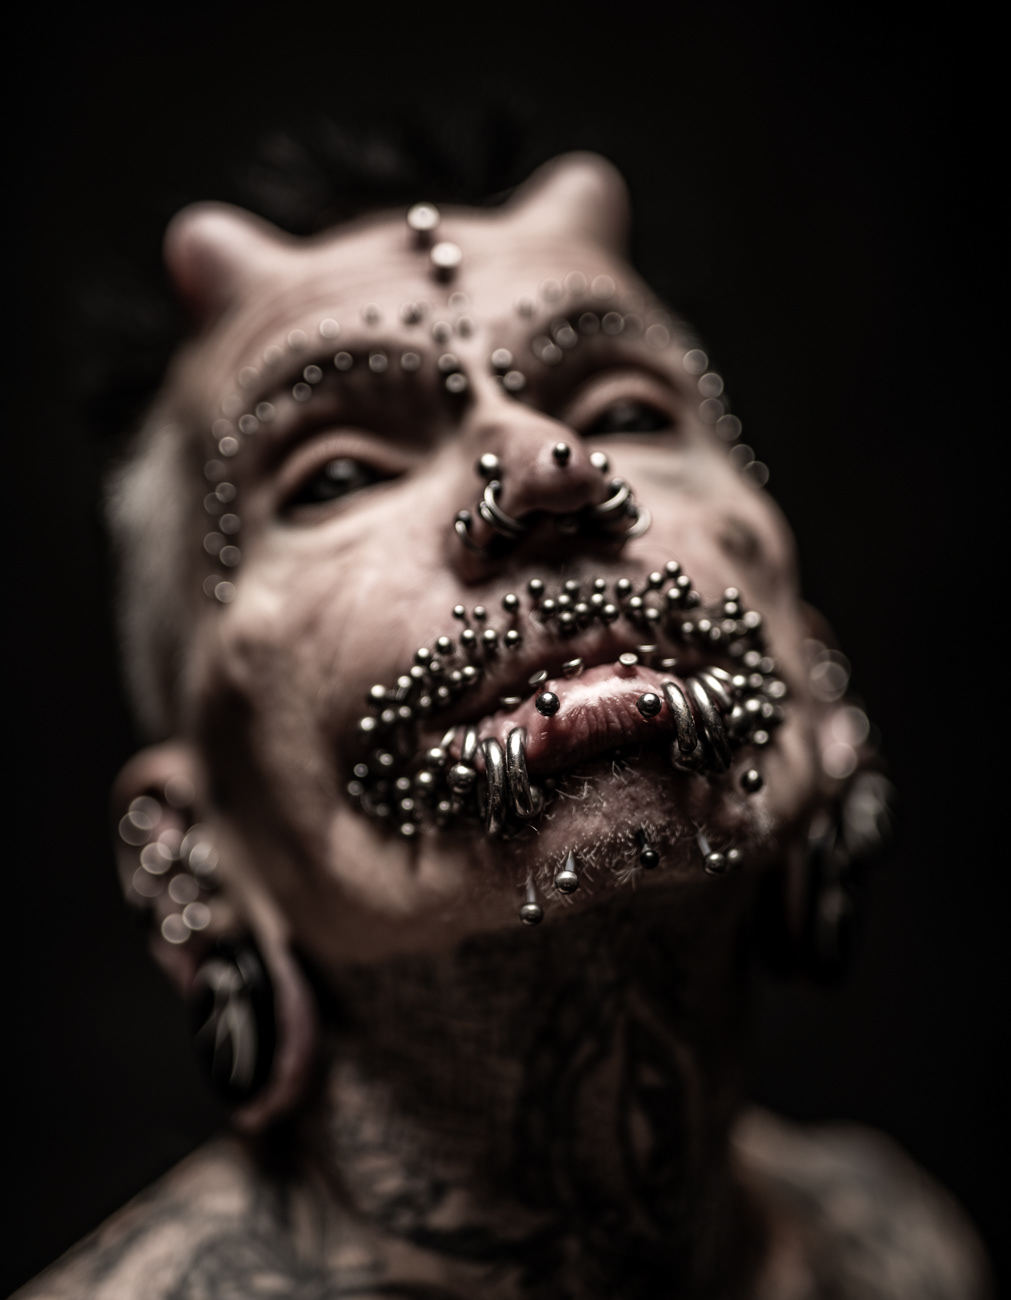 piercing tattoo rendering 3D Maya photoshop creative bodymod Body Modification art